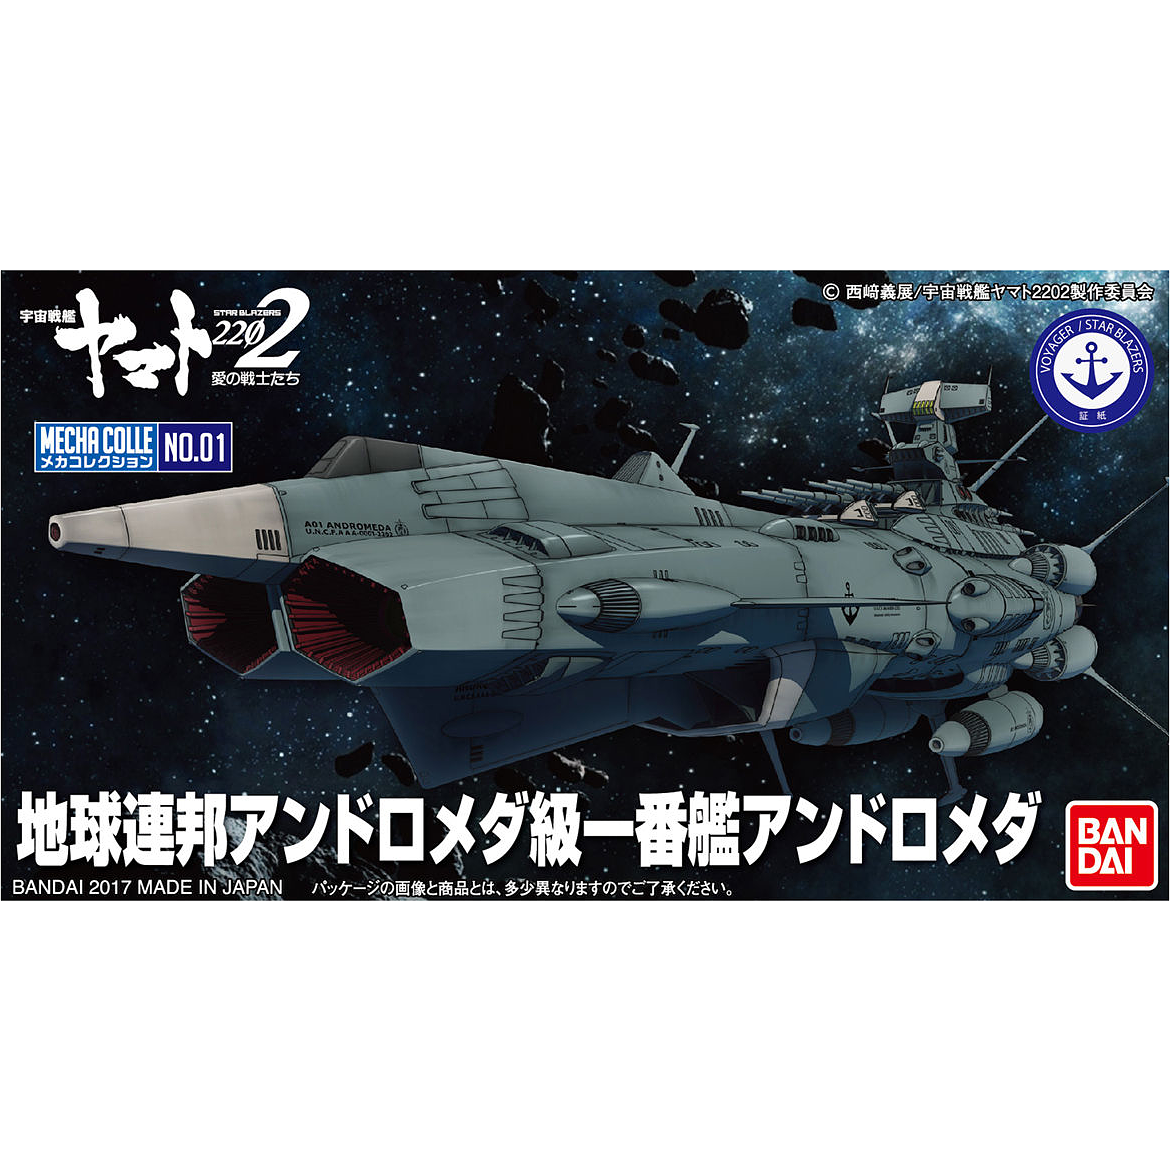 UNCF. AAA-1 Andromeda #01 Star Blazers Mecha Collection #2418807 Space Battleship Yamato 2202 by Bandai